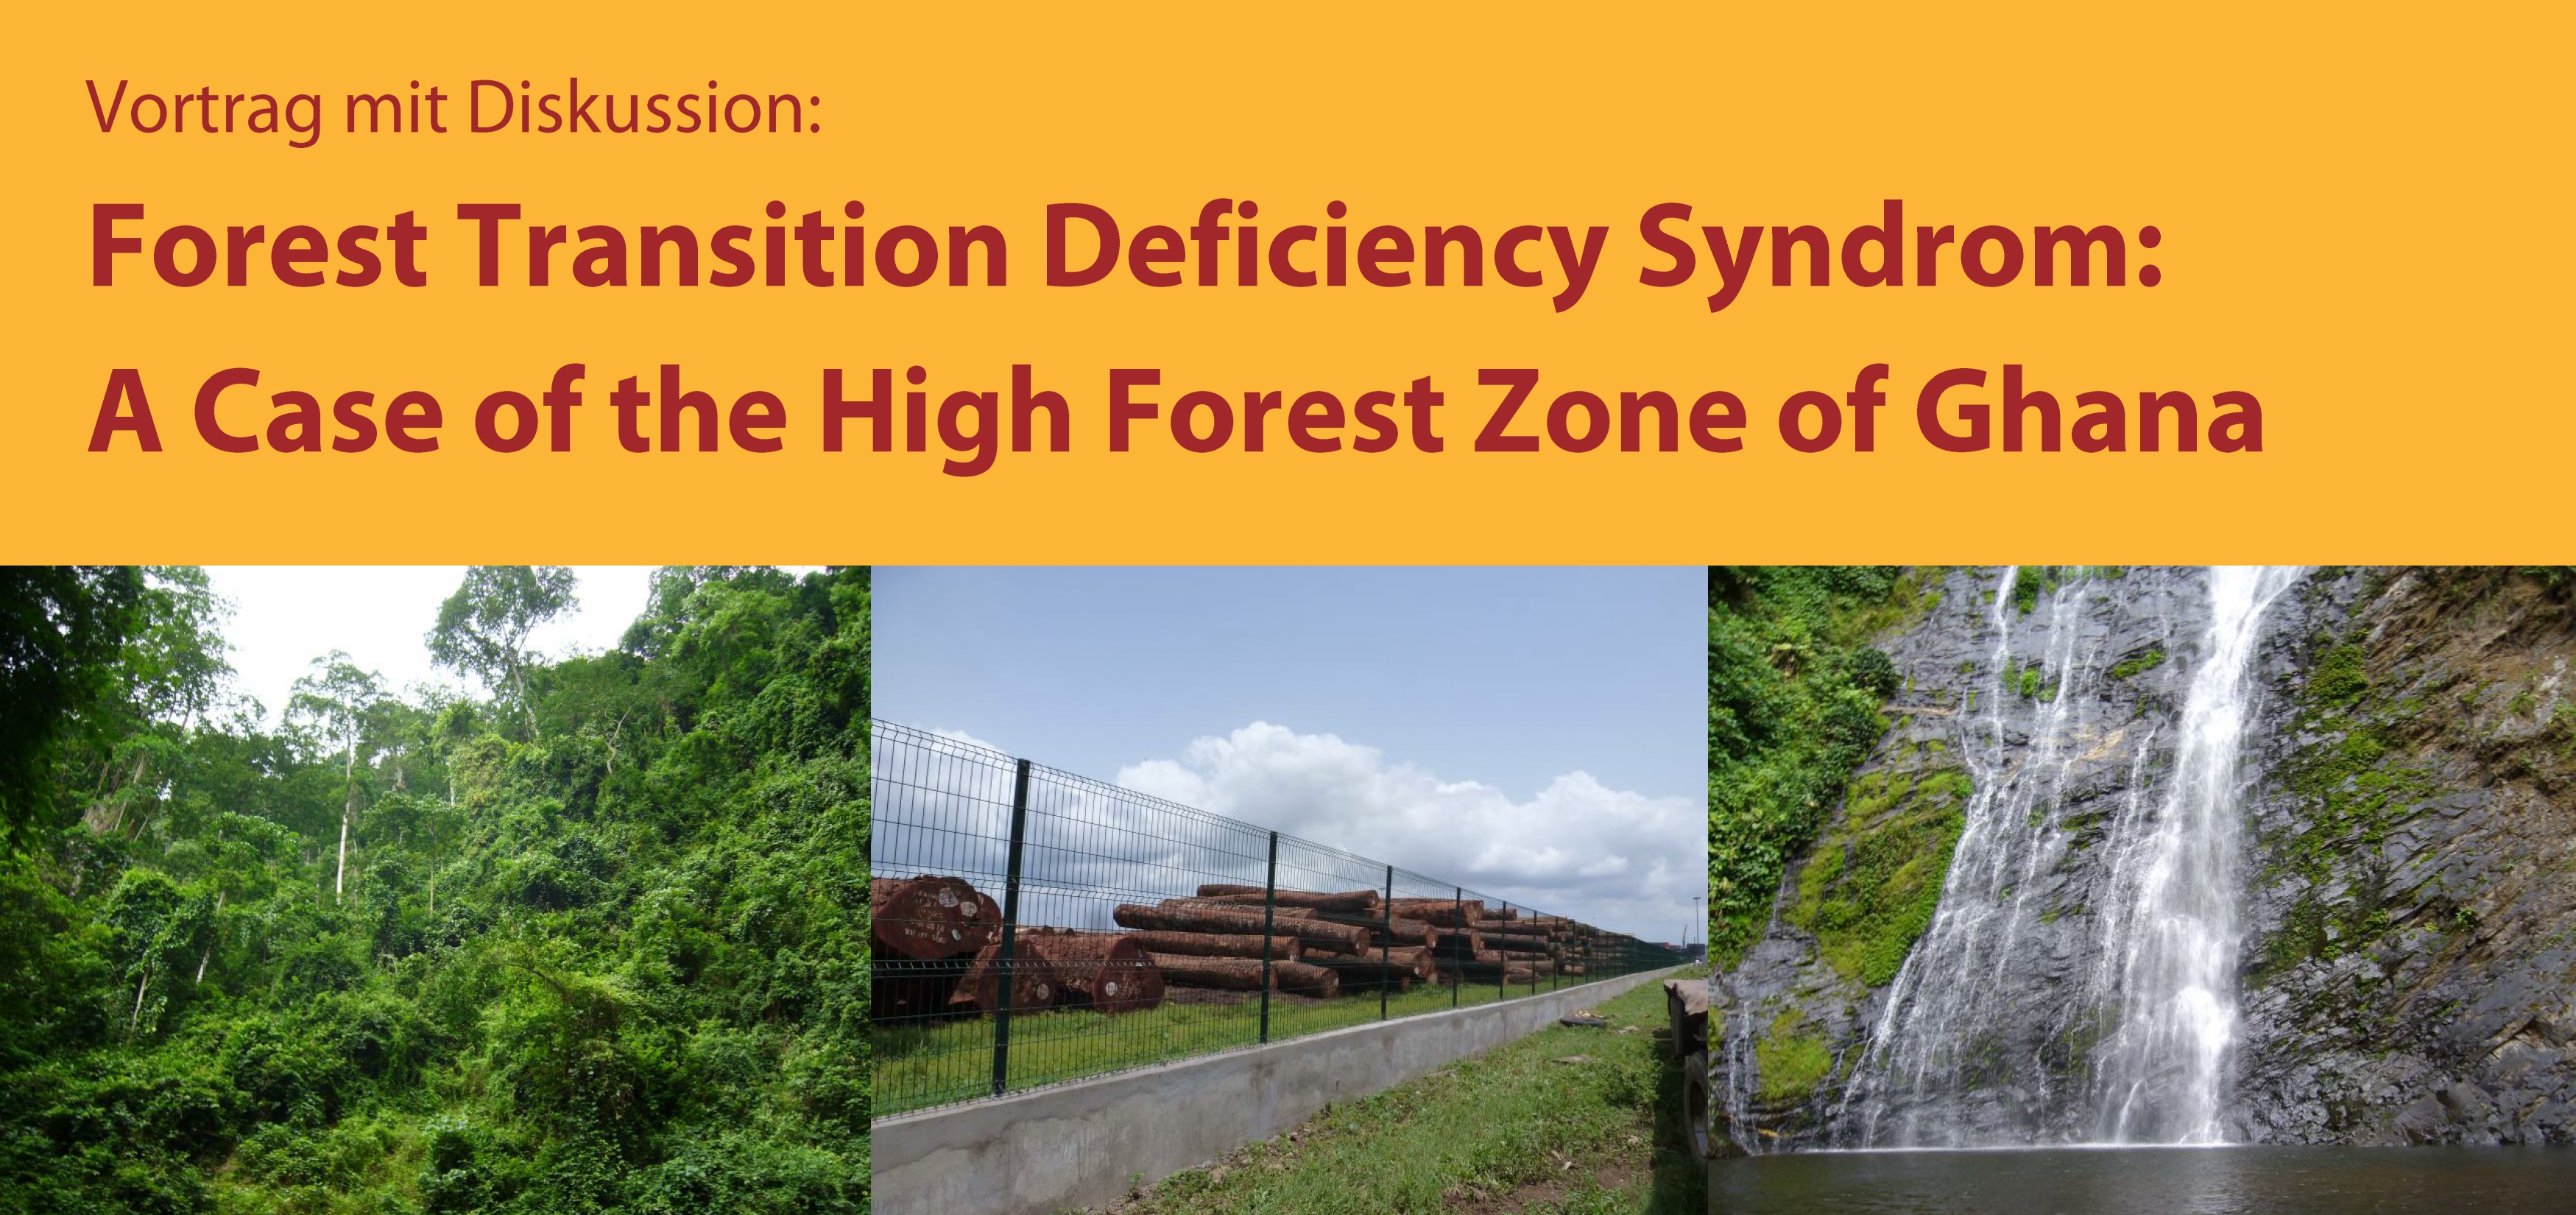 Vortrag an der Universität Kassel: Forest Transition Deficiency Syndrom